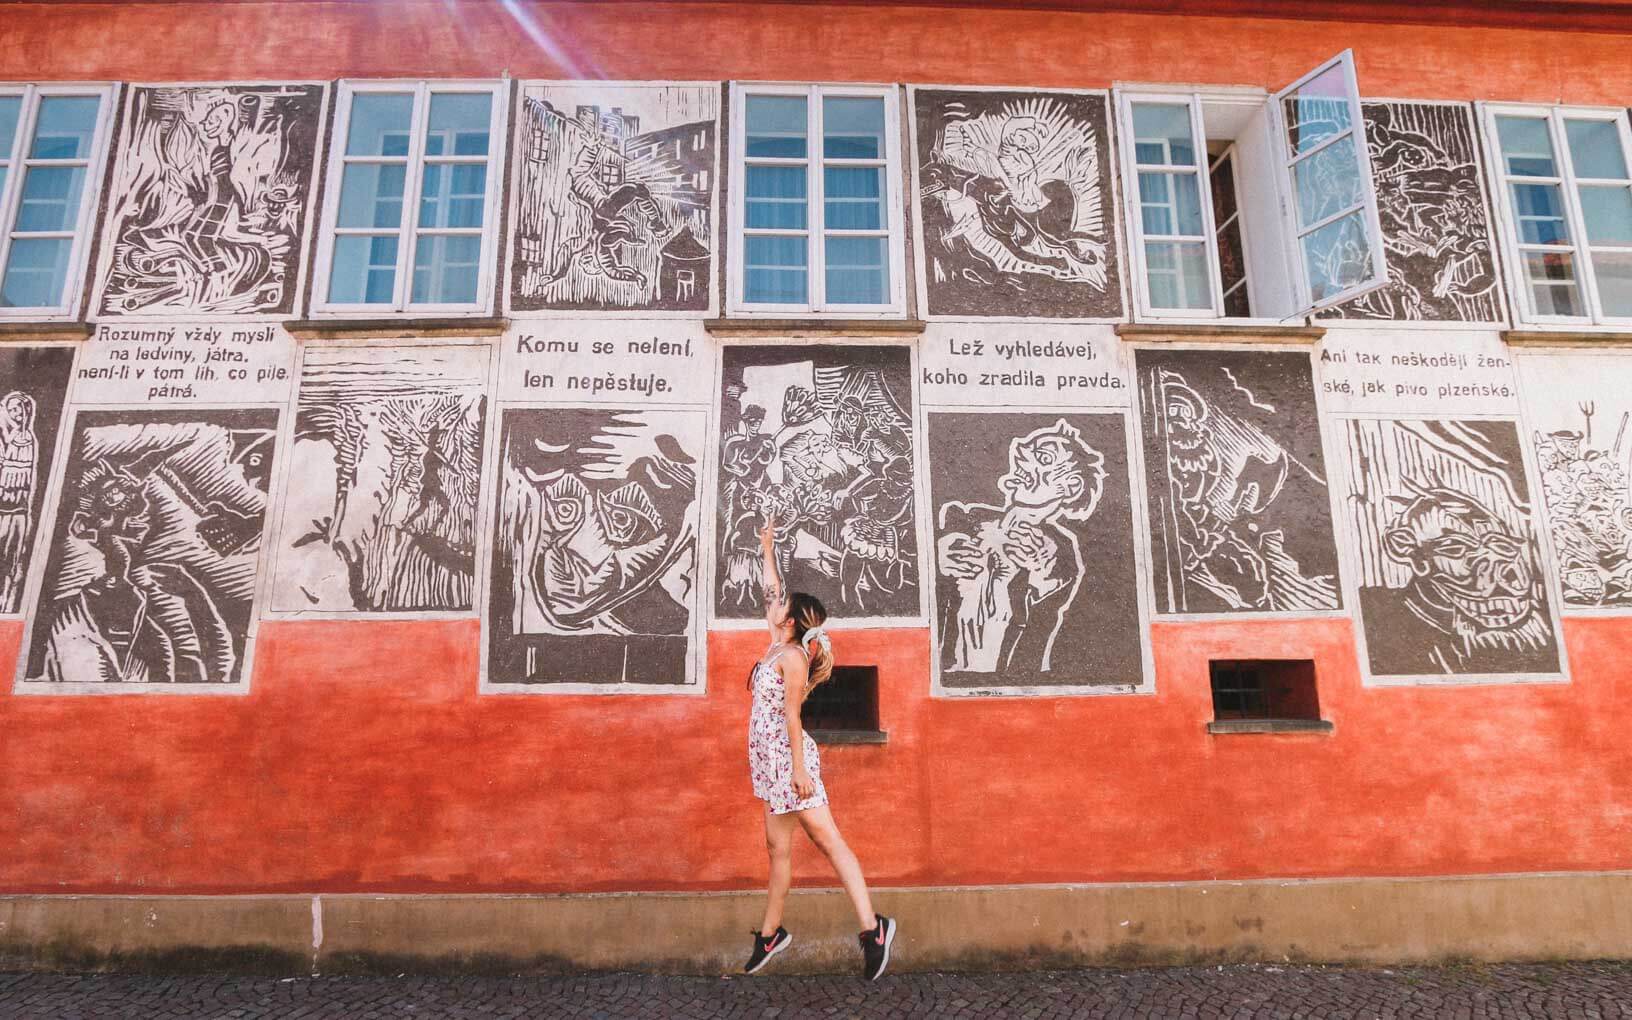 Josefa Váchala street art - Visit Litomysl in Czech Republic